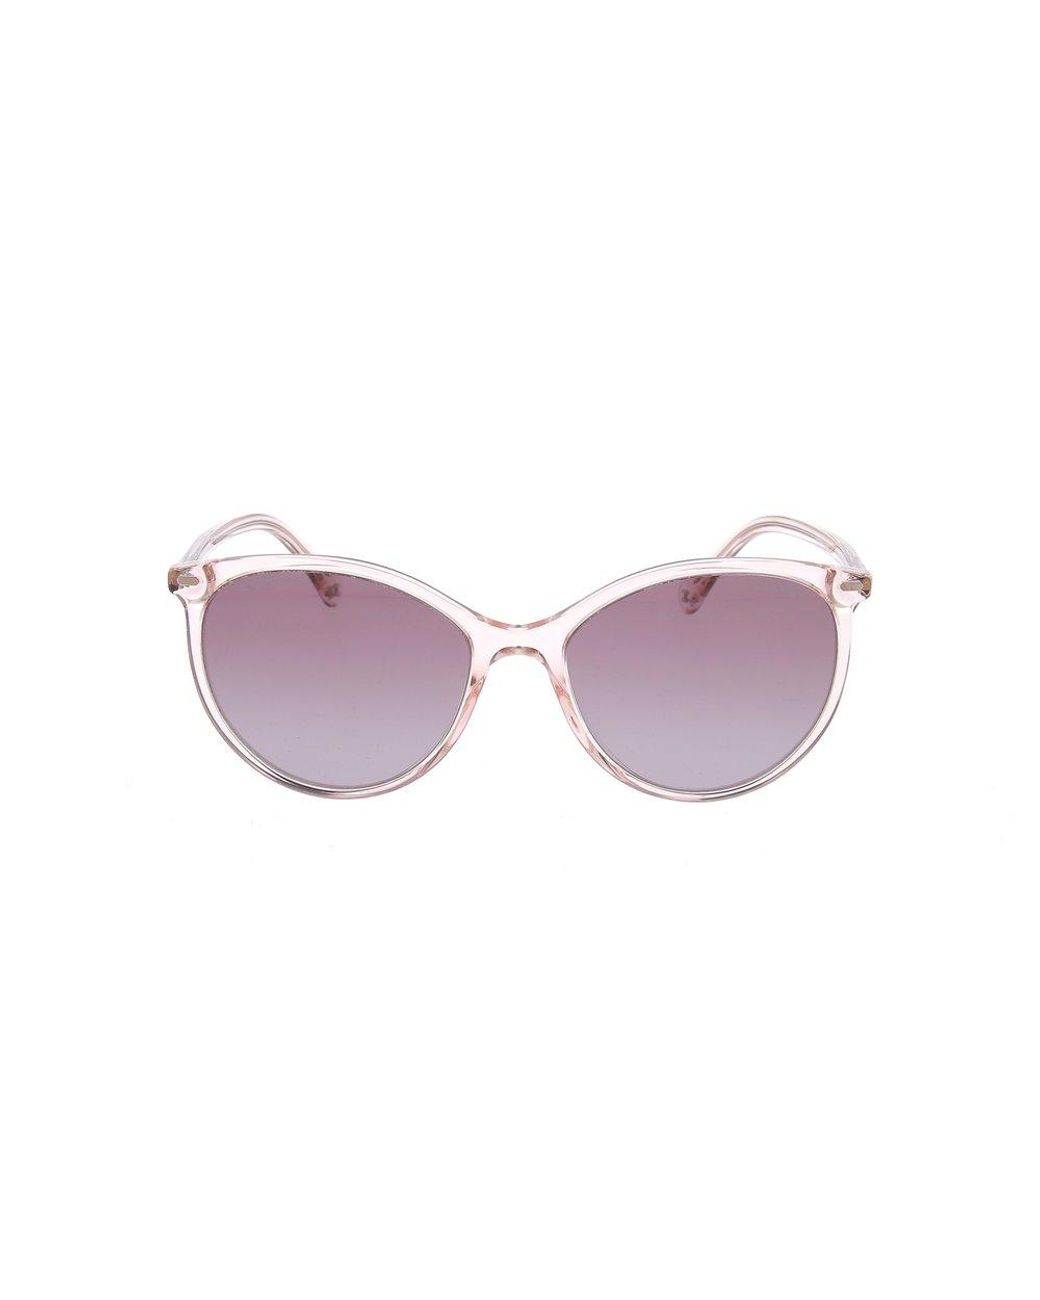 Chanel Chanel Pantos Sunglasses in Purple